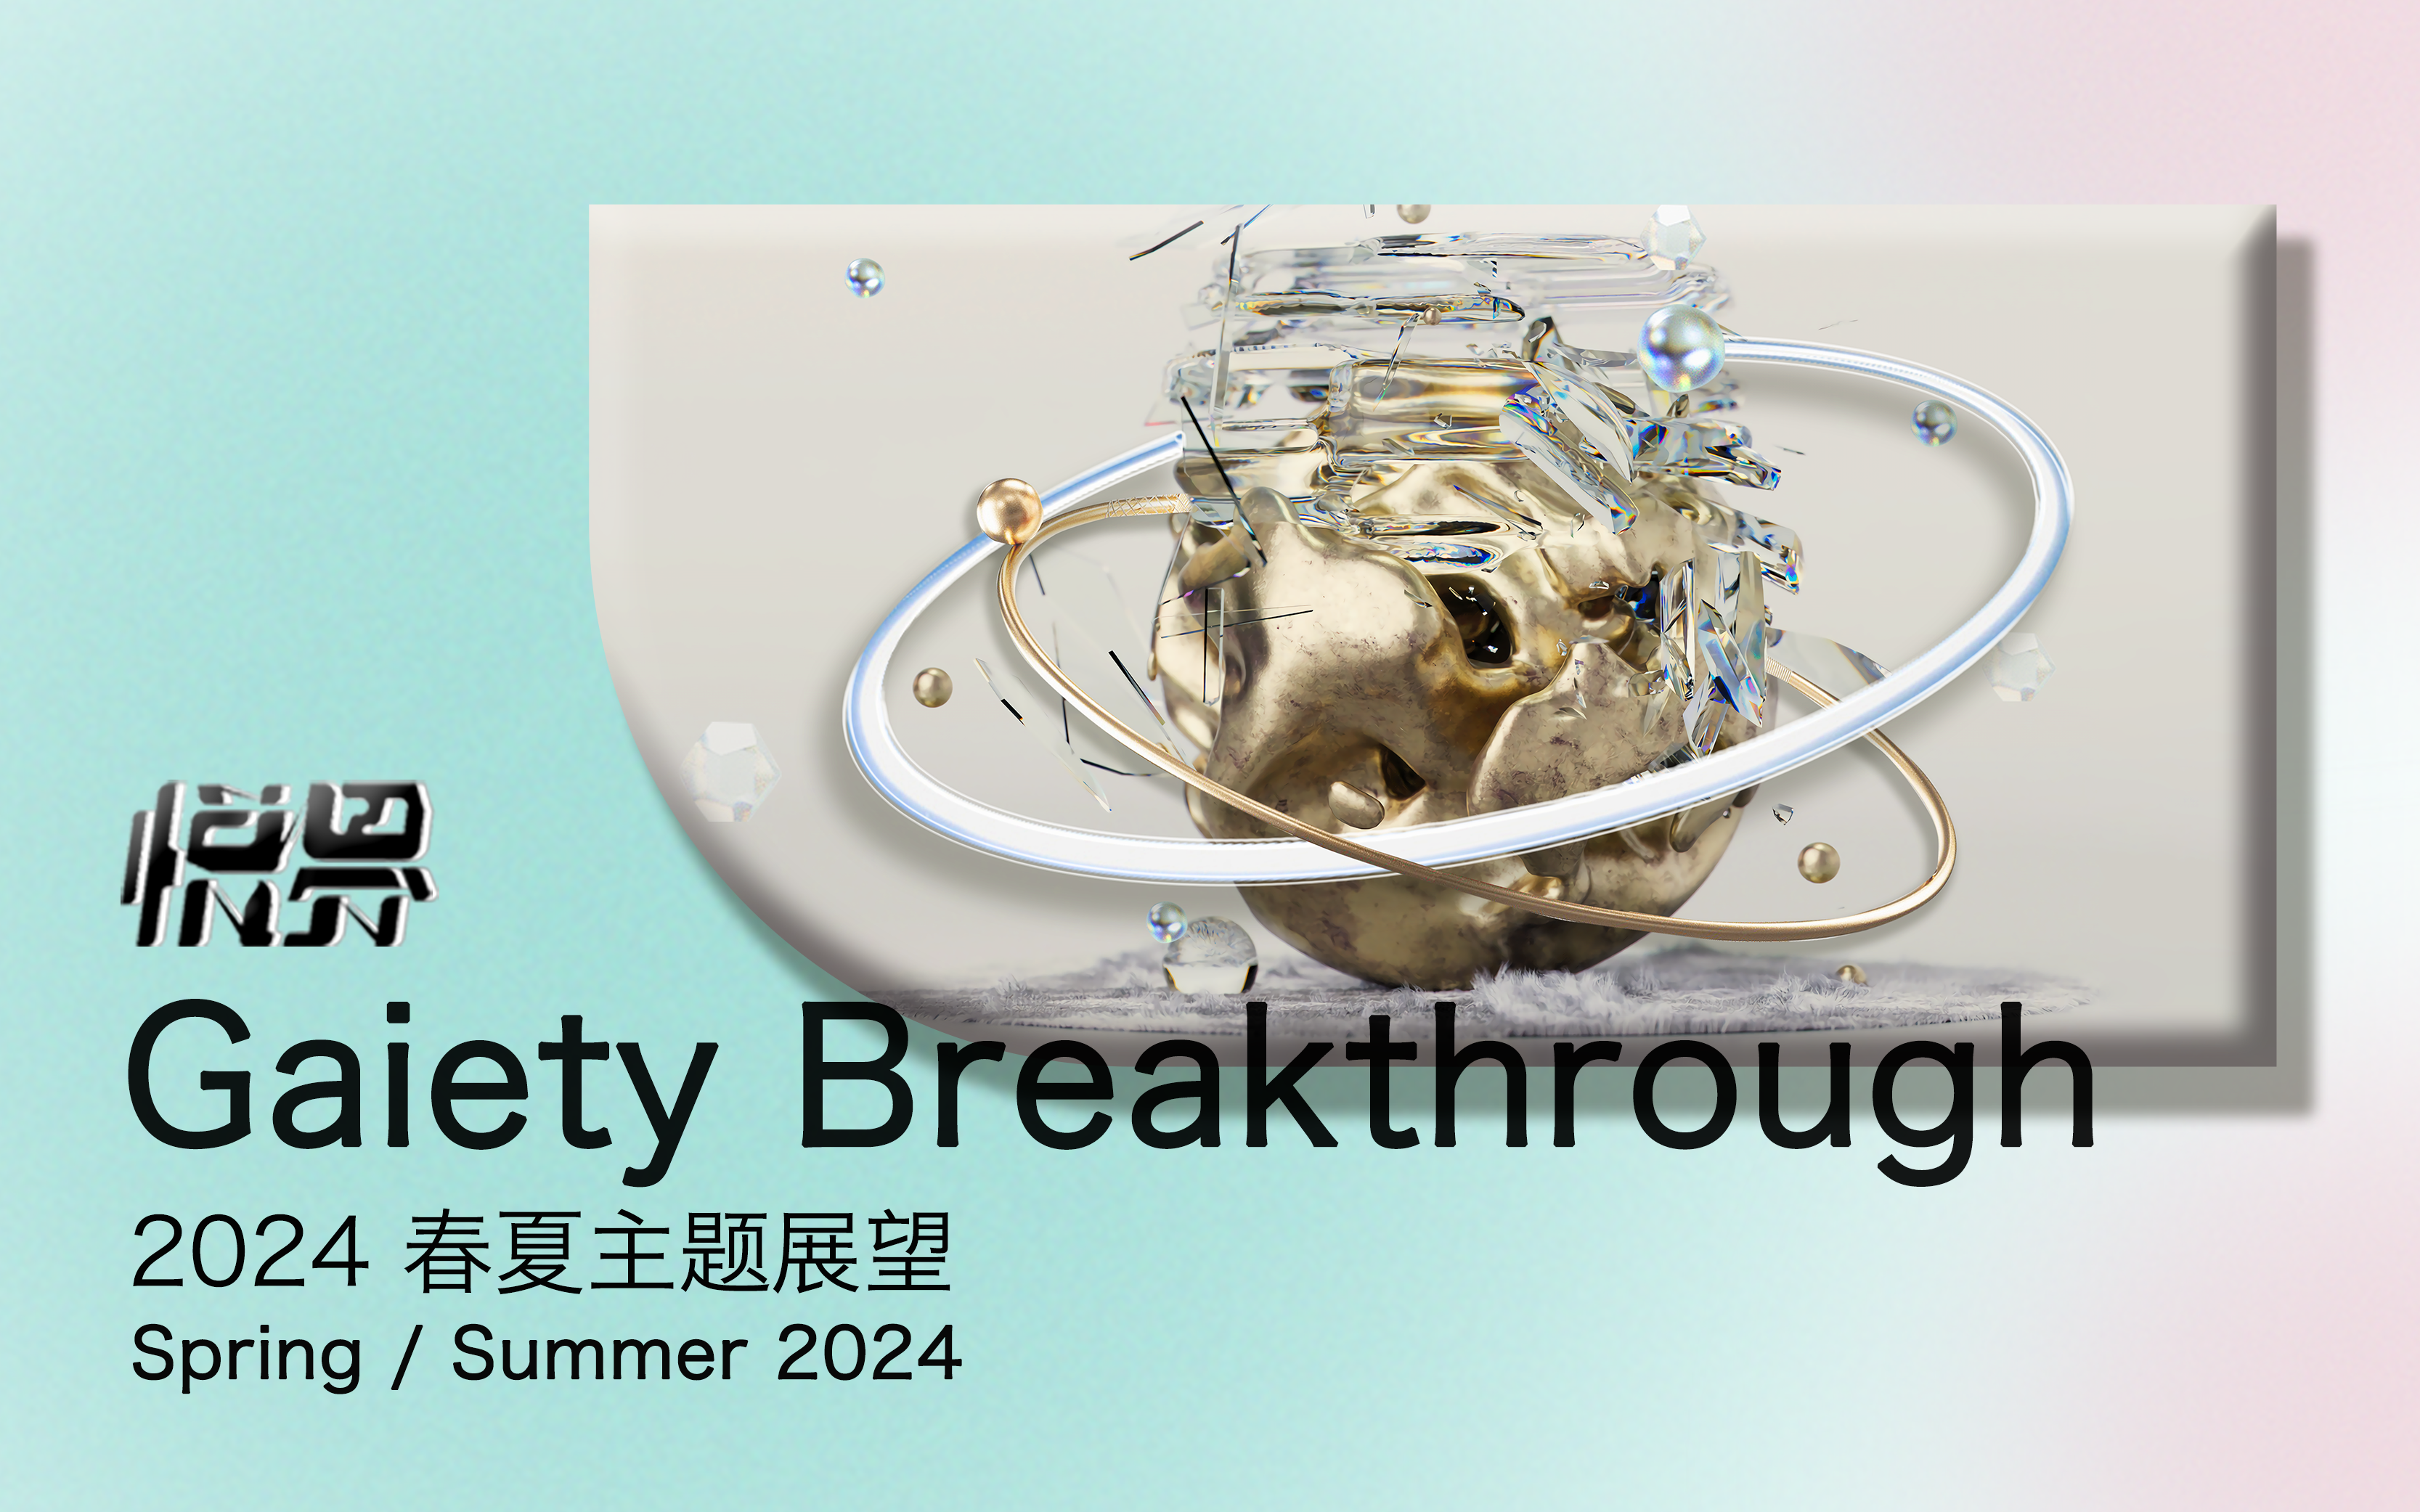 Gaiety Breakthrough -- The S/S 2024 Theme Forecast